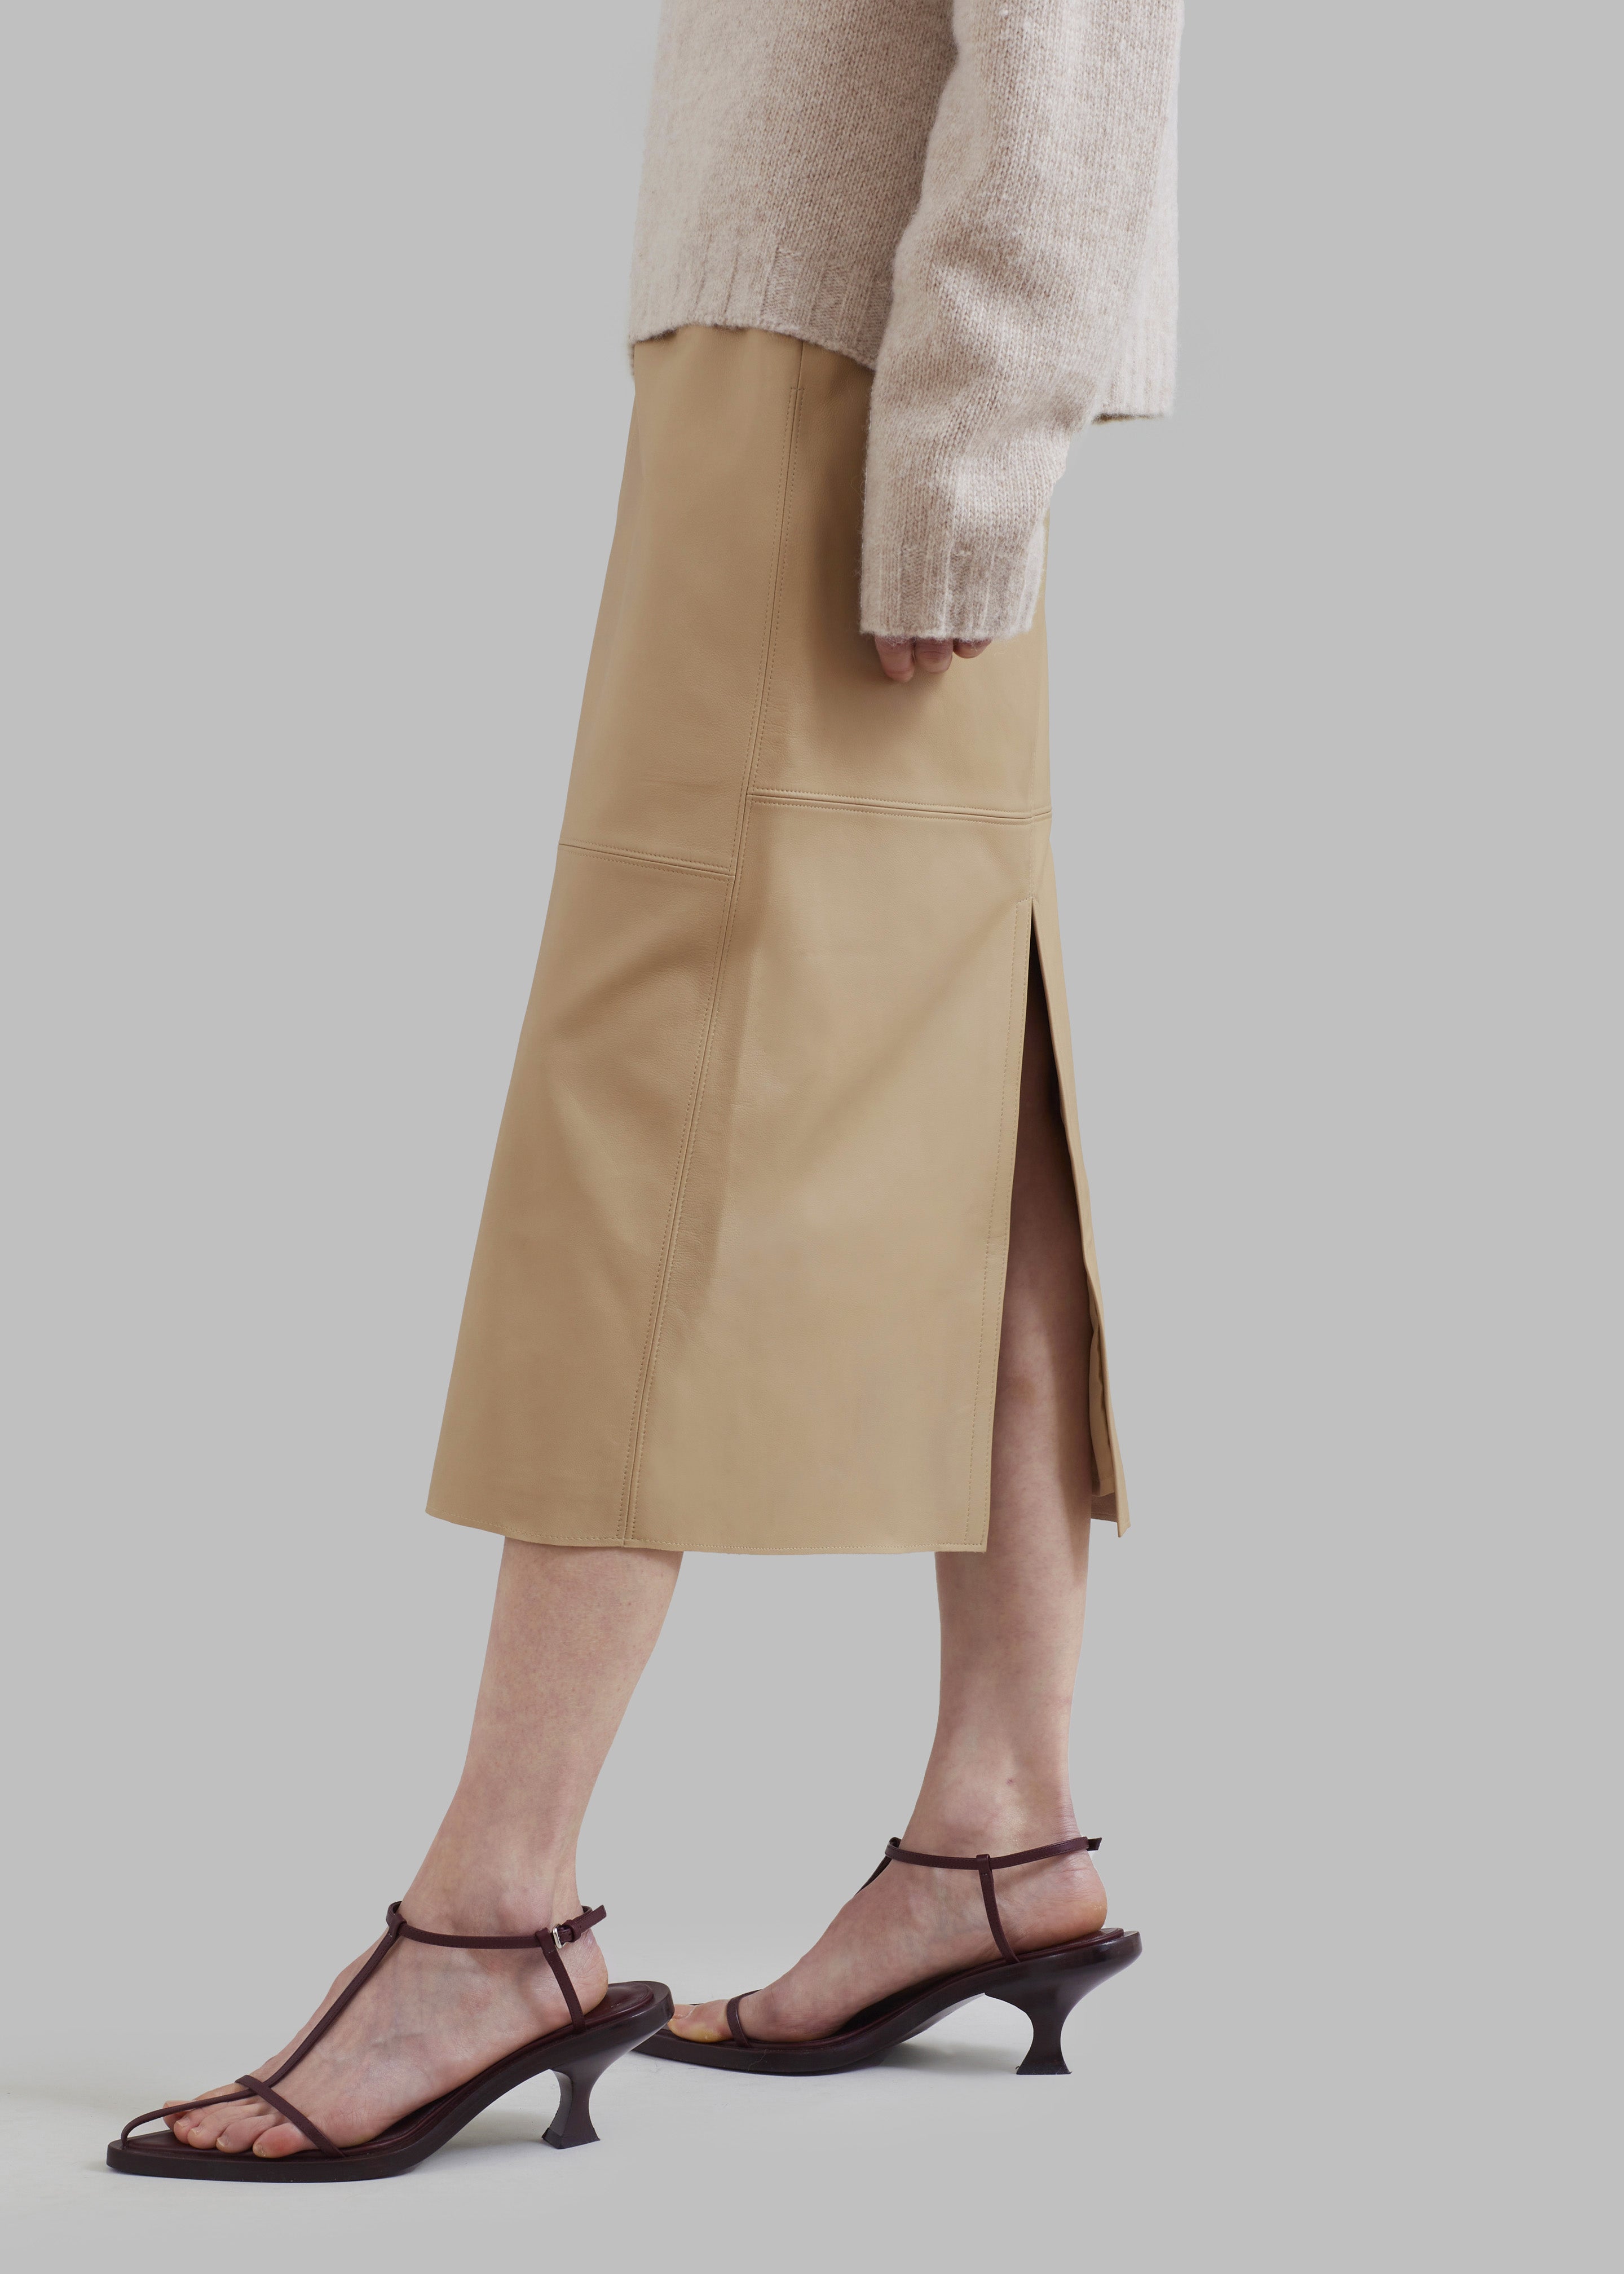 Heather Leather Pencil Skirt - Beige - 5